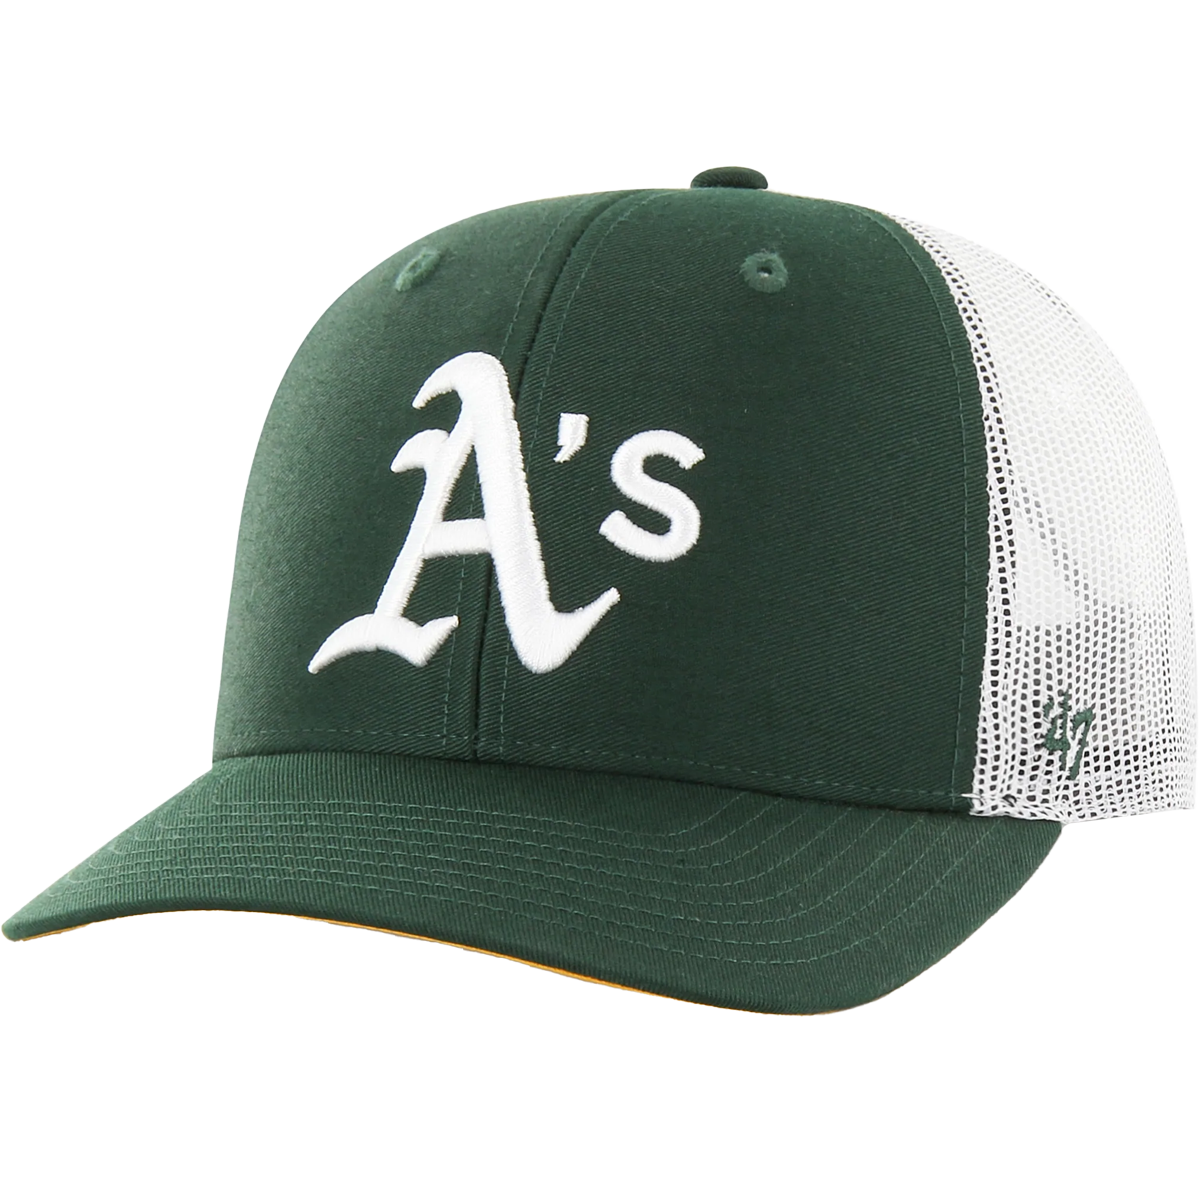 47 Men's Oakland Athletics Trucker Adjustable Hat - Green - One Size Each